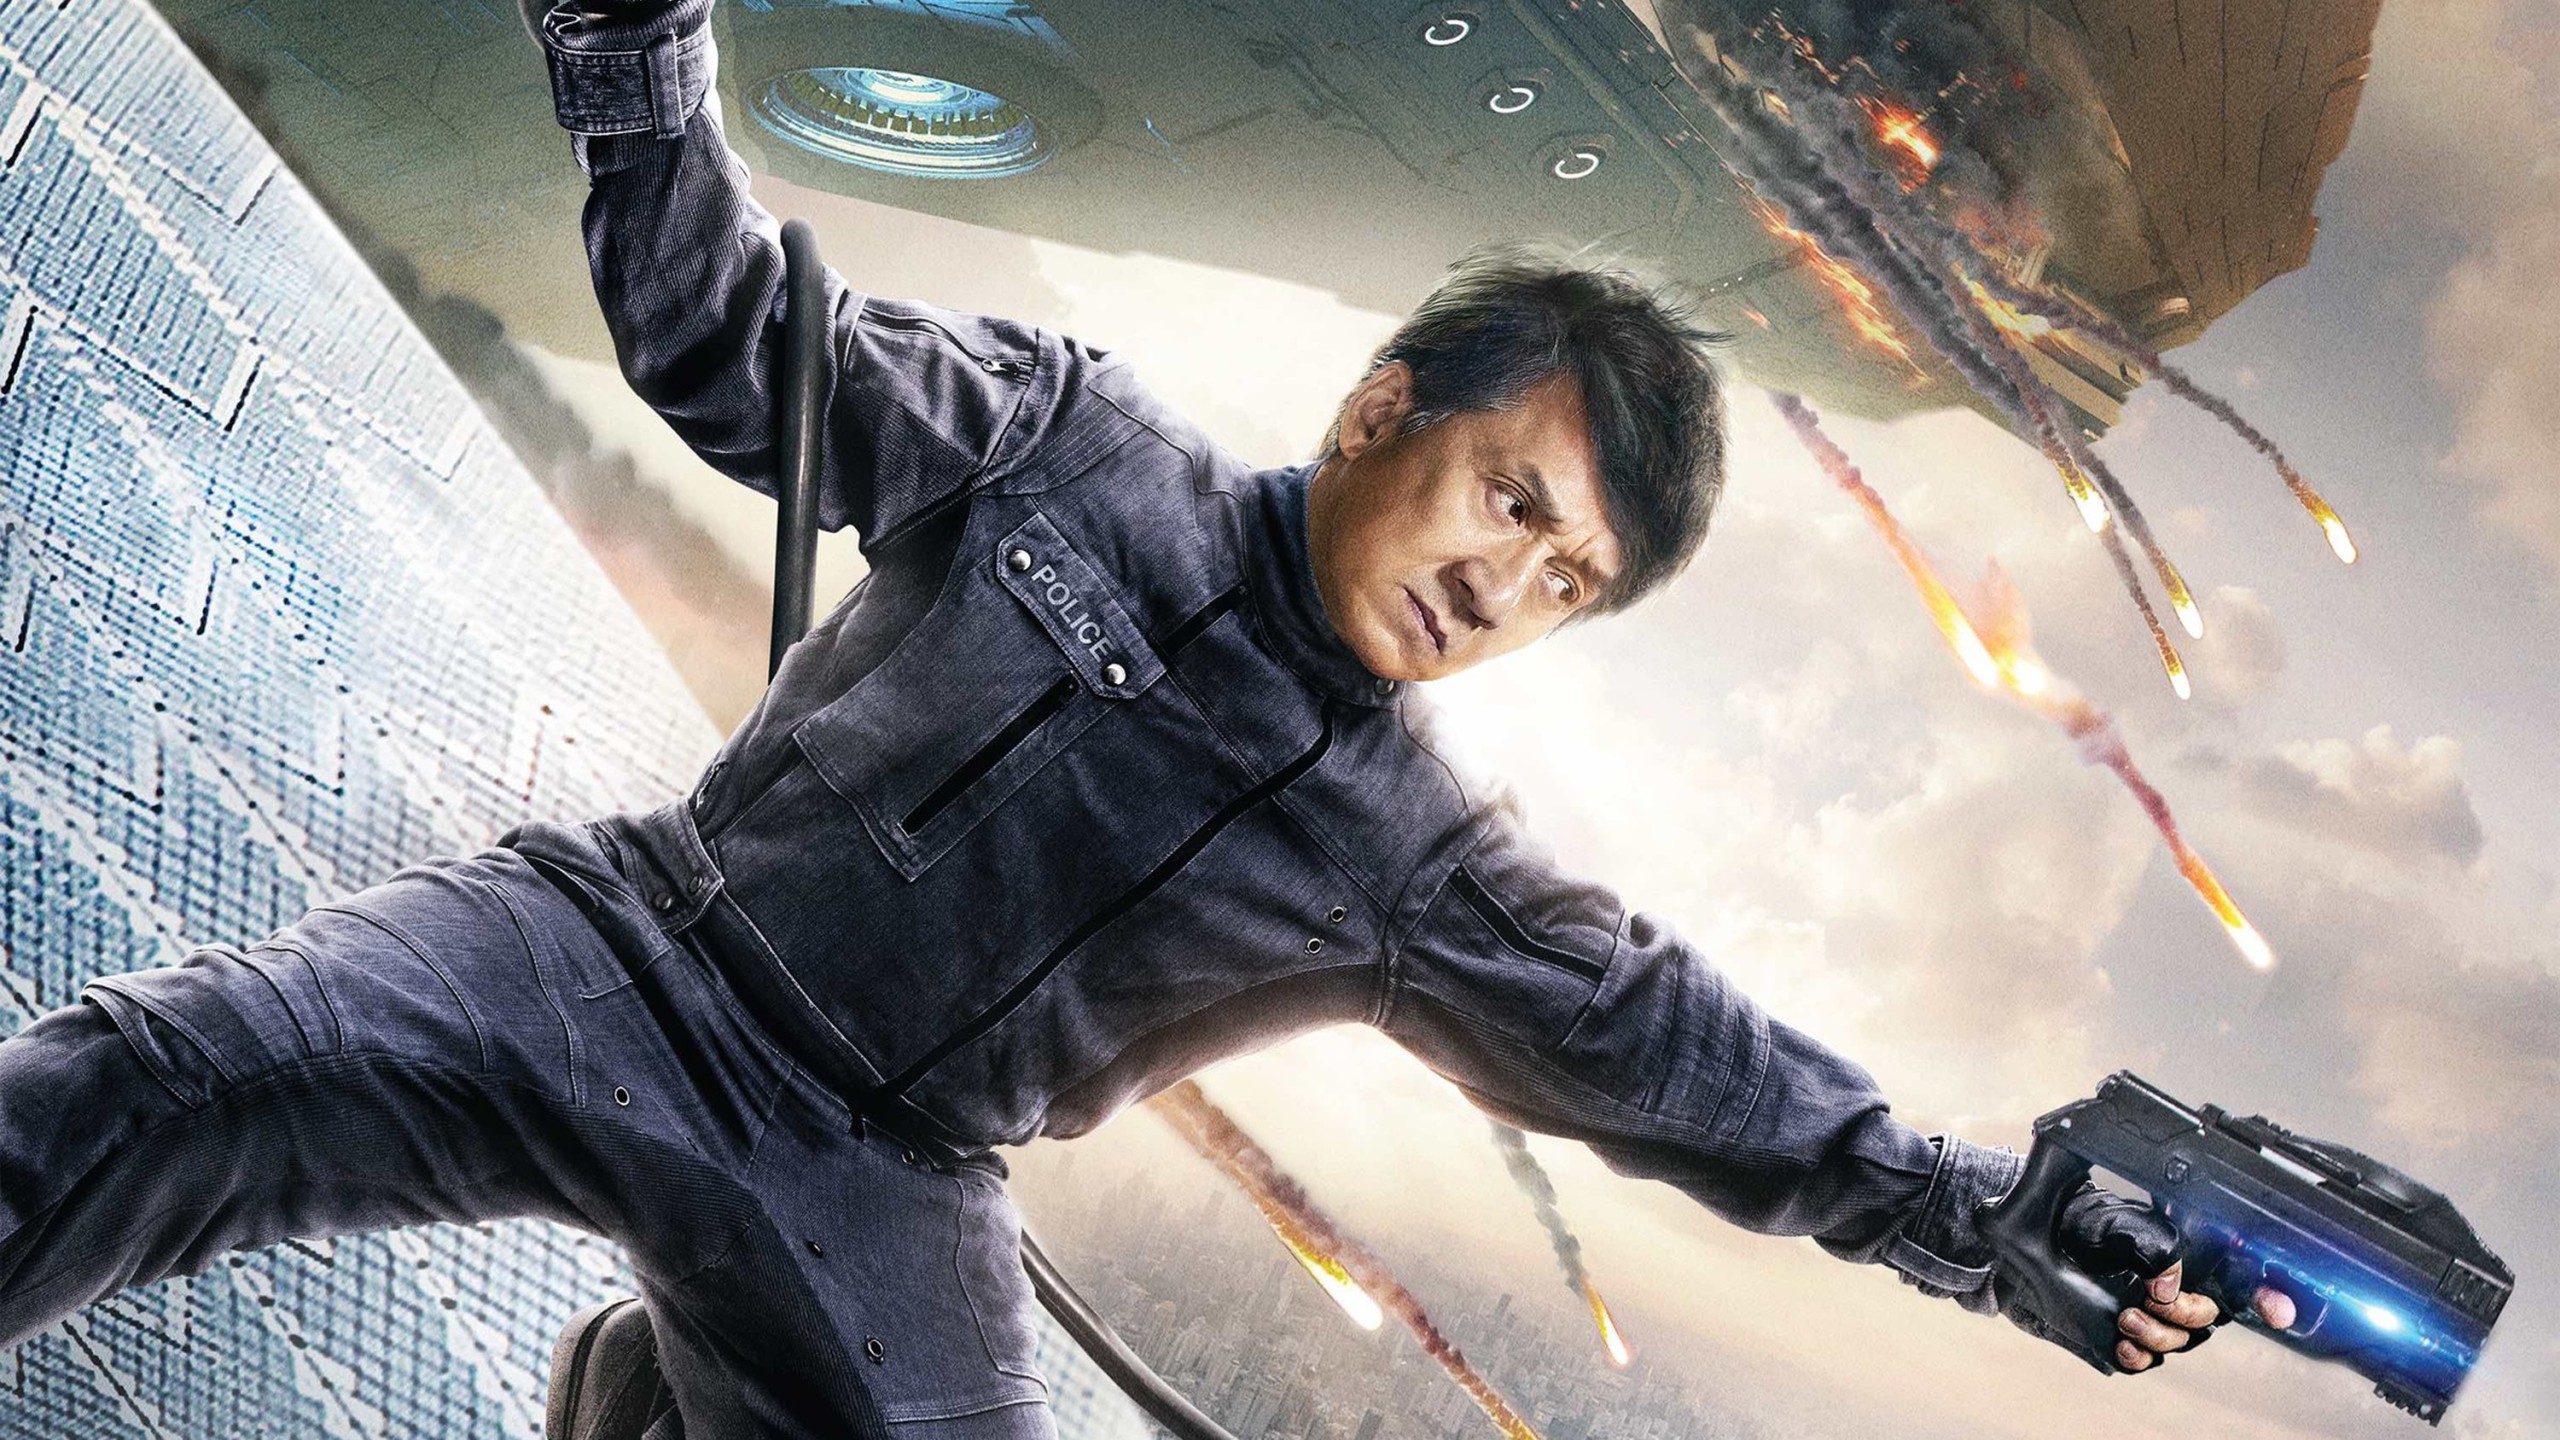 Jackie Chan Finally Receives Honorary Oscar Award Hd Desktop Wallpaper